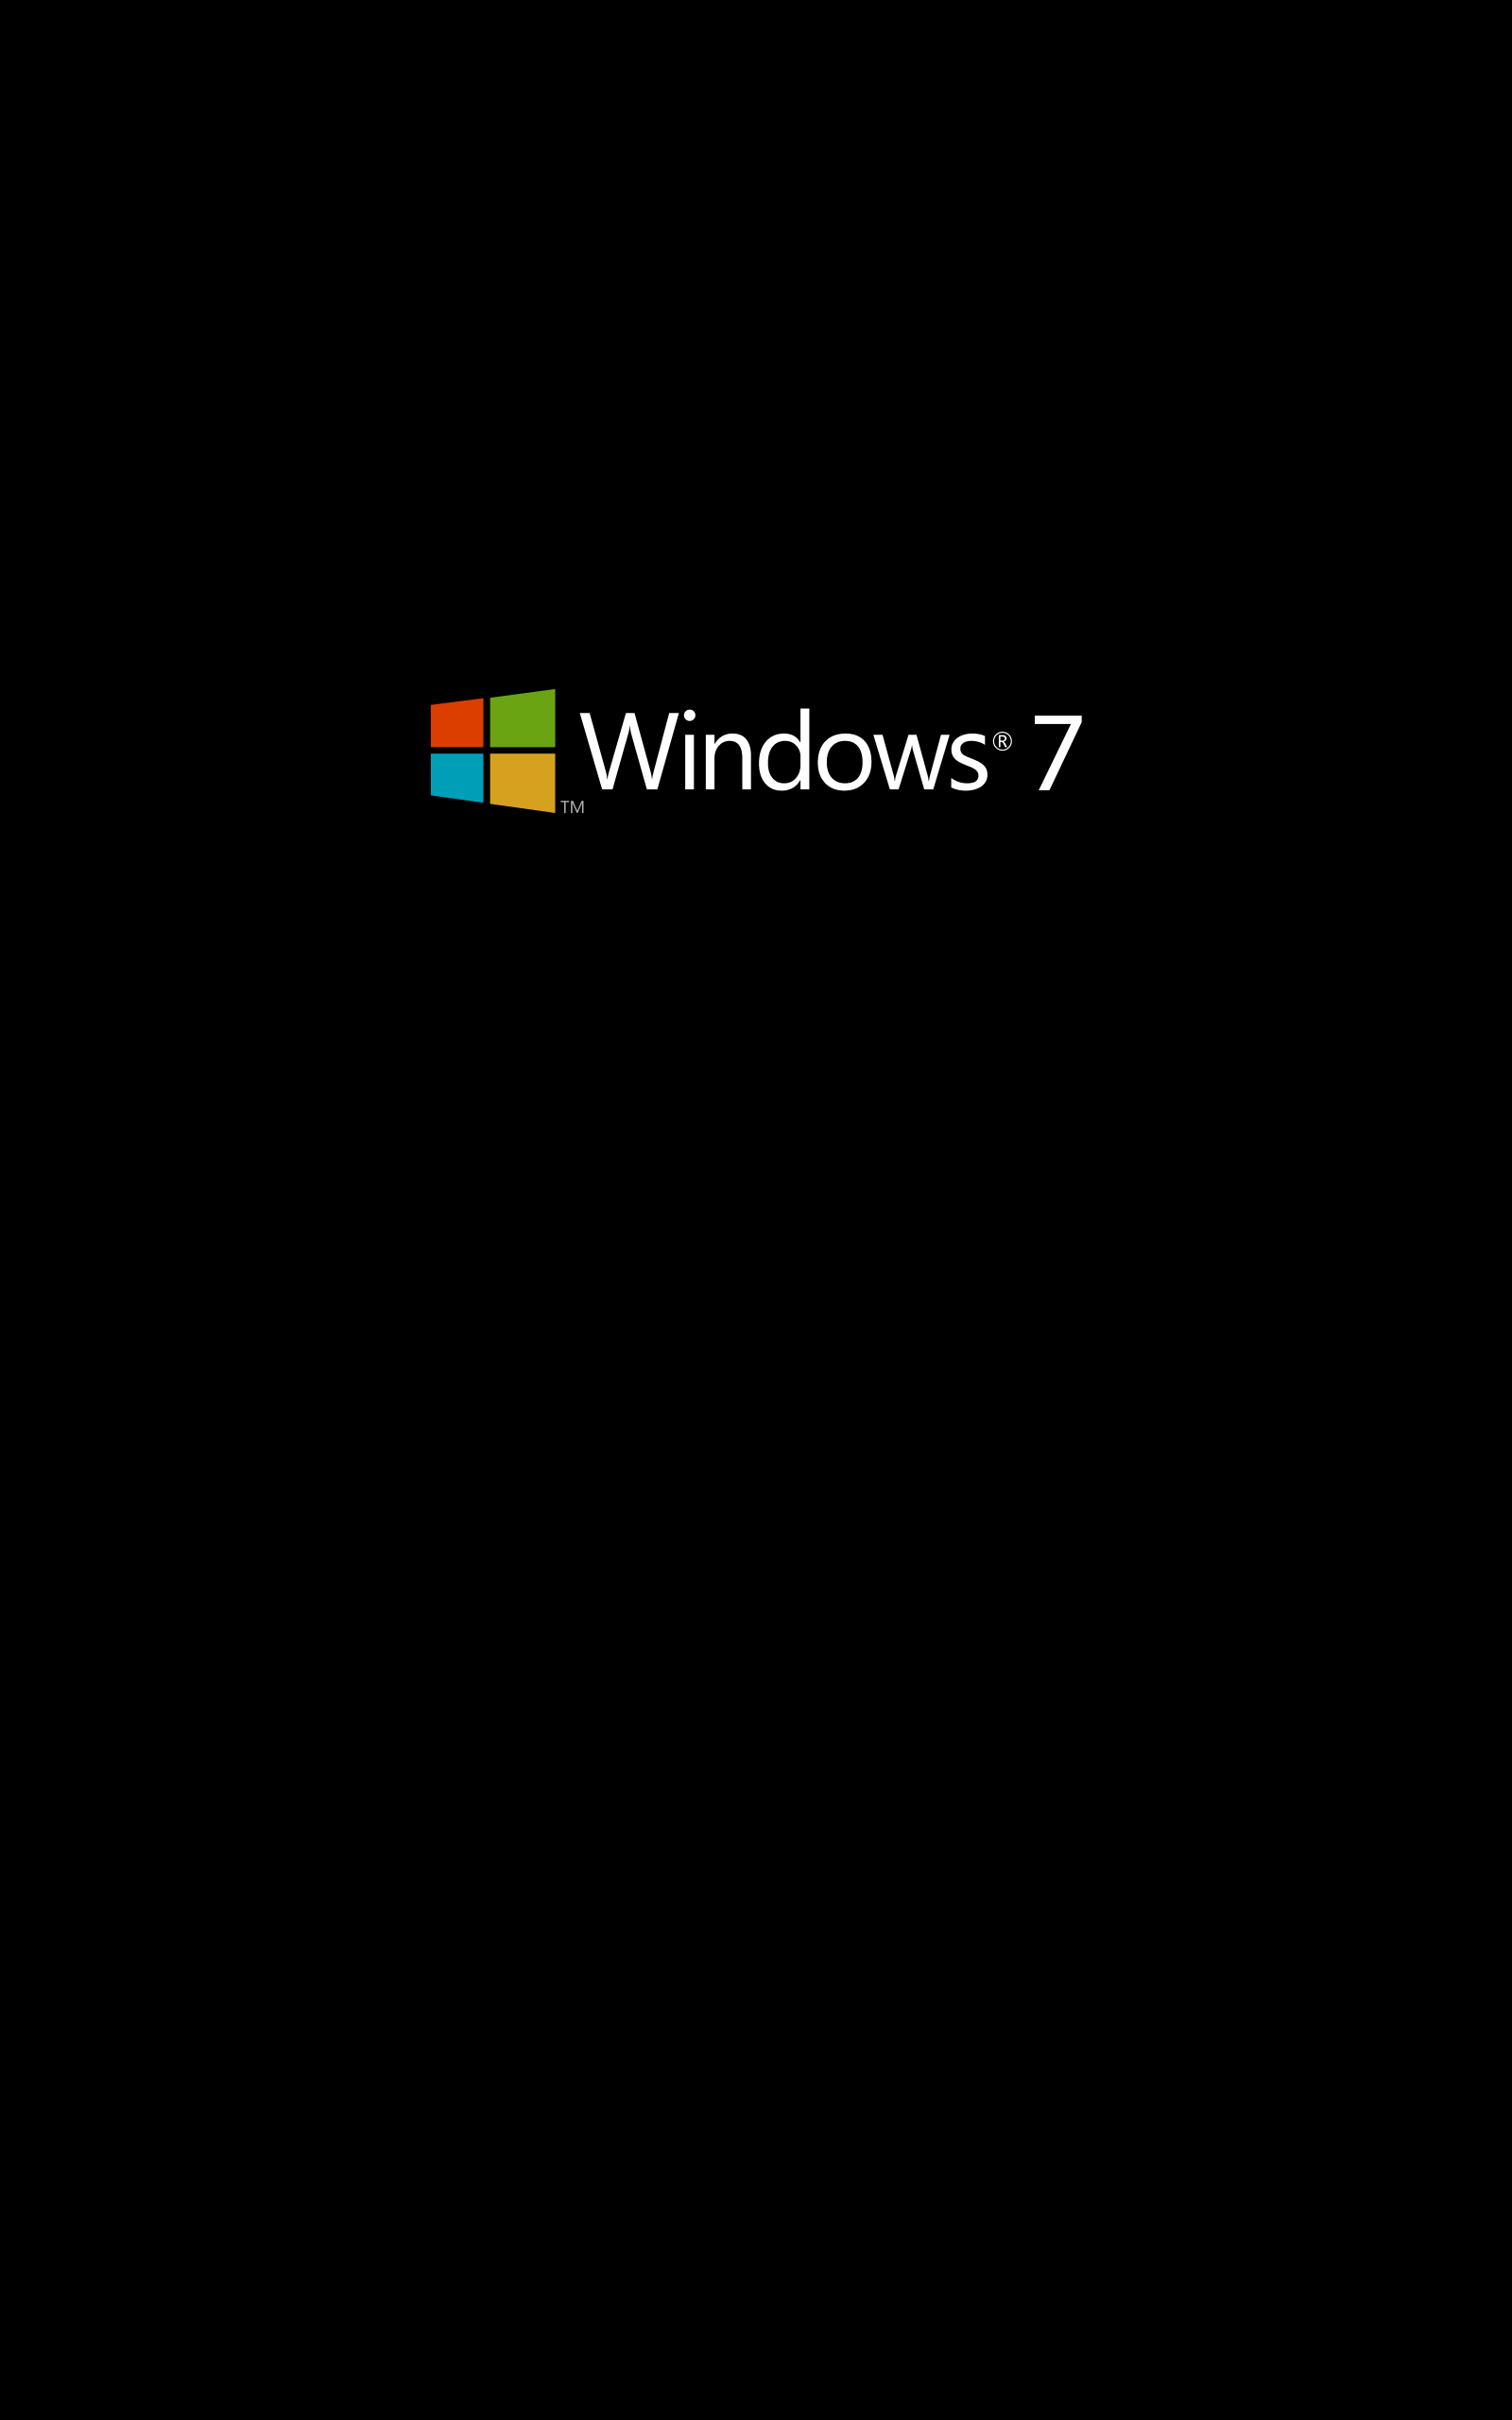 General 1600x2560 Windows 7 Microsoft Windows operating system minimalism simple background logo portrait display black background